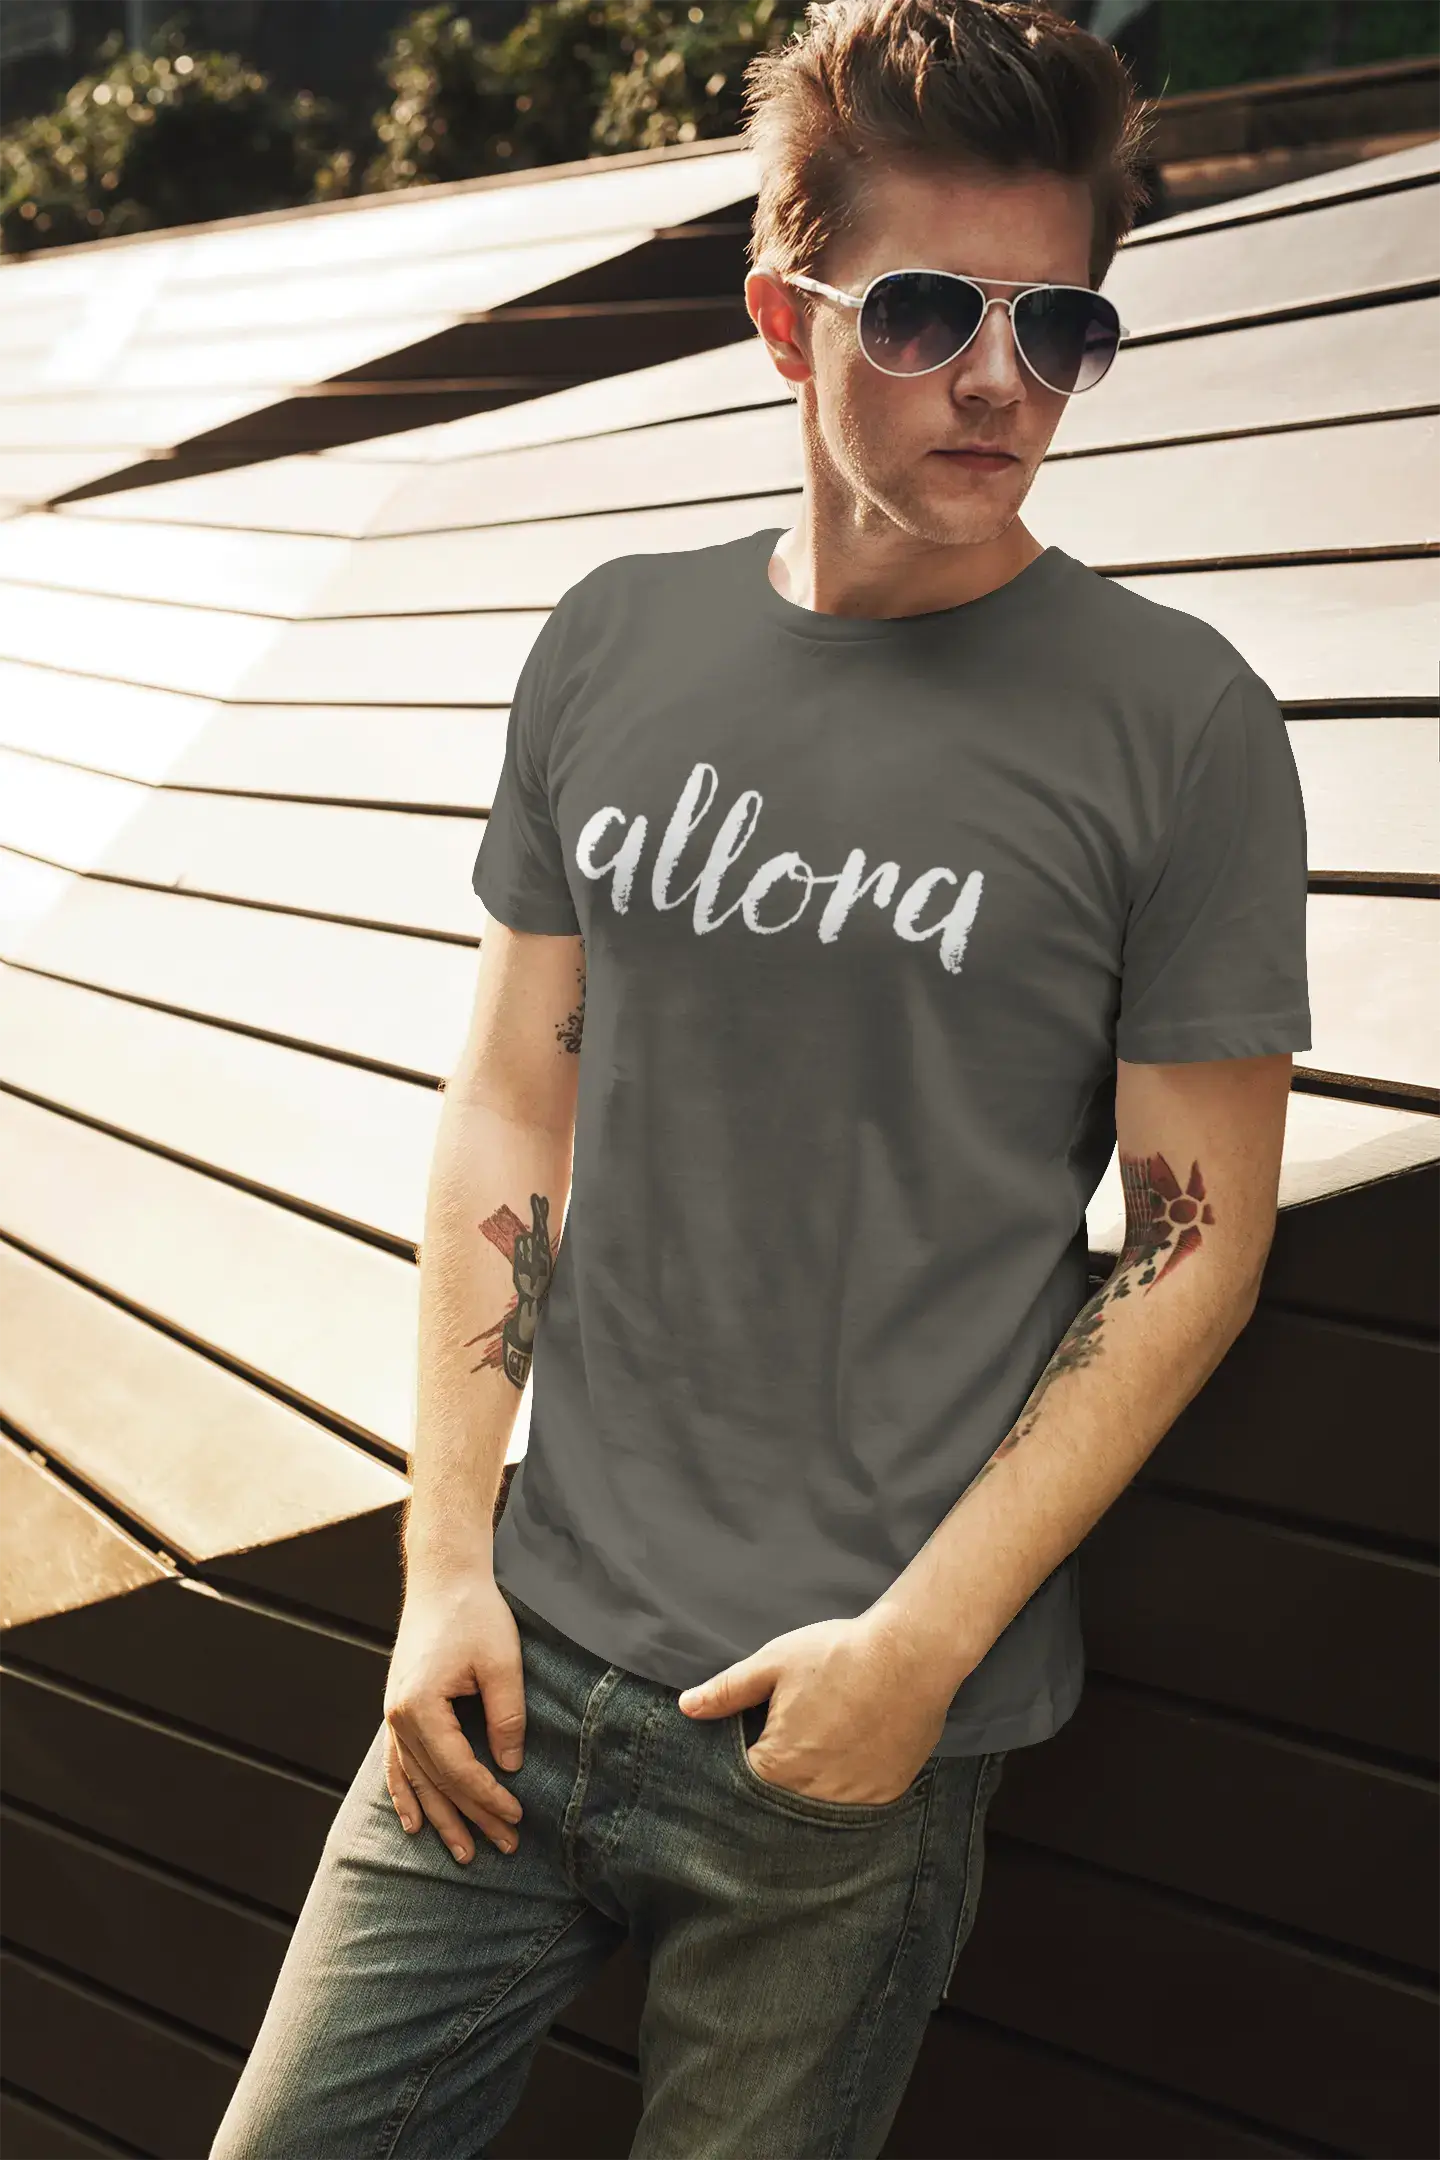 ULTRABASIC - Graphic Printed Men's Allora T-Shirt Vintage White